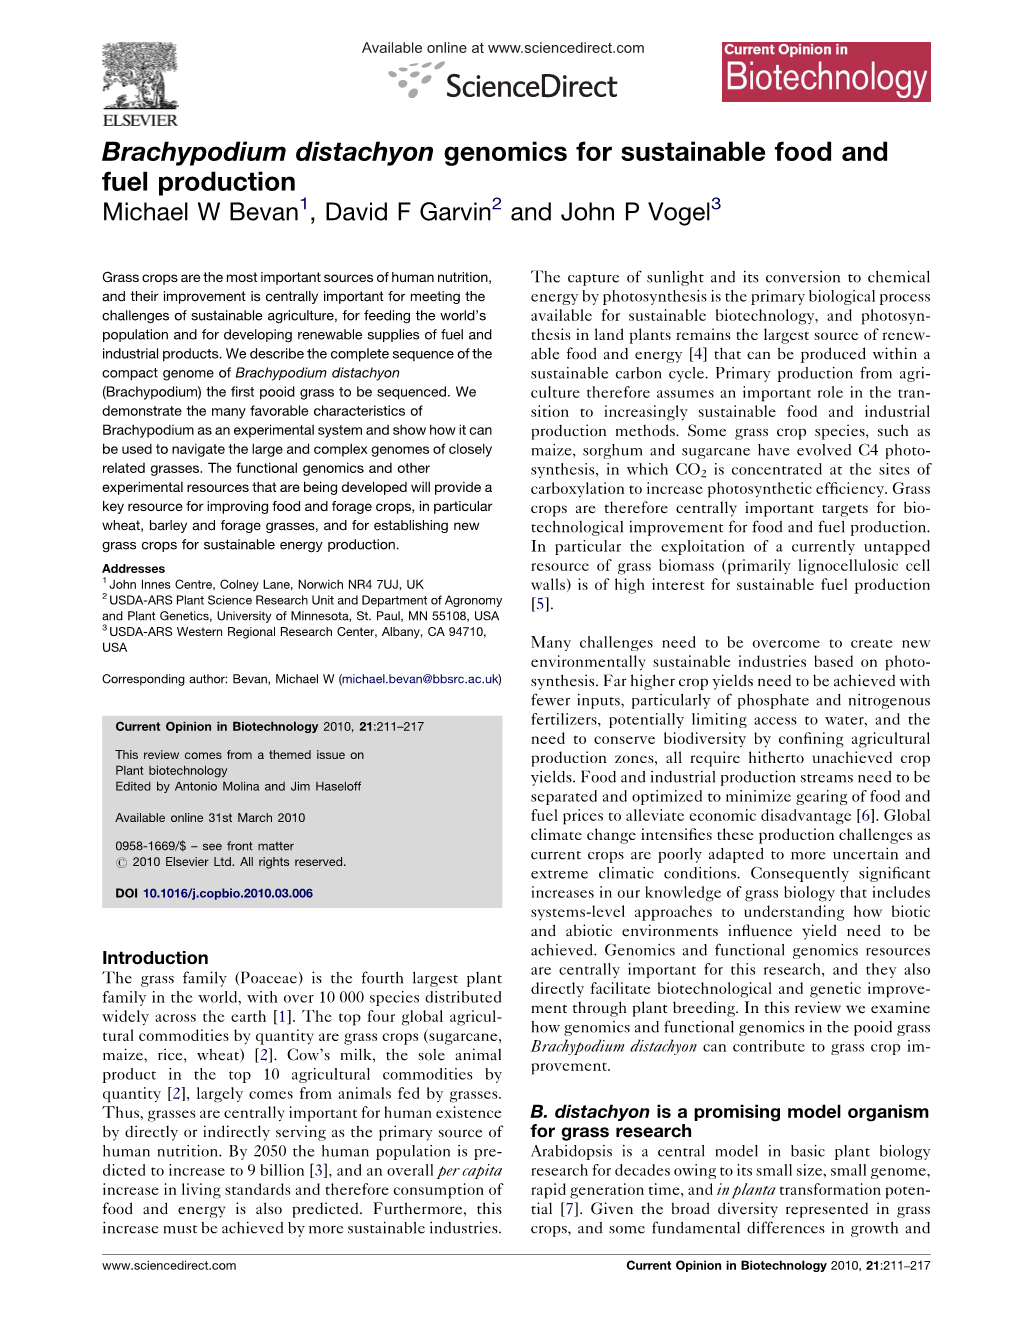 Brachypodium Distachyon Genomics for Sustainable Food and Fuel Production Michael W Bevan1, David F Garvin2 and John P Vogel3